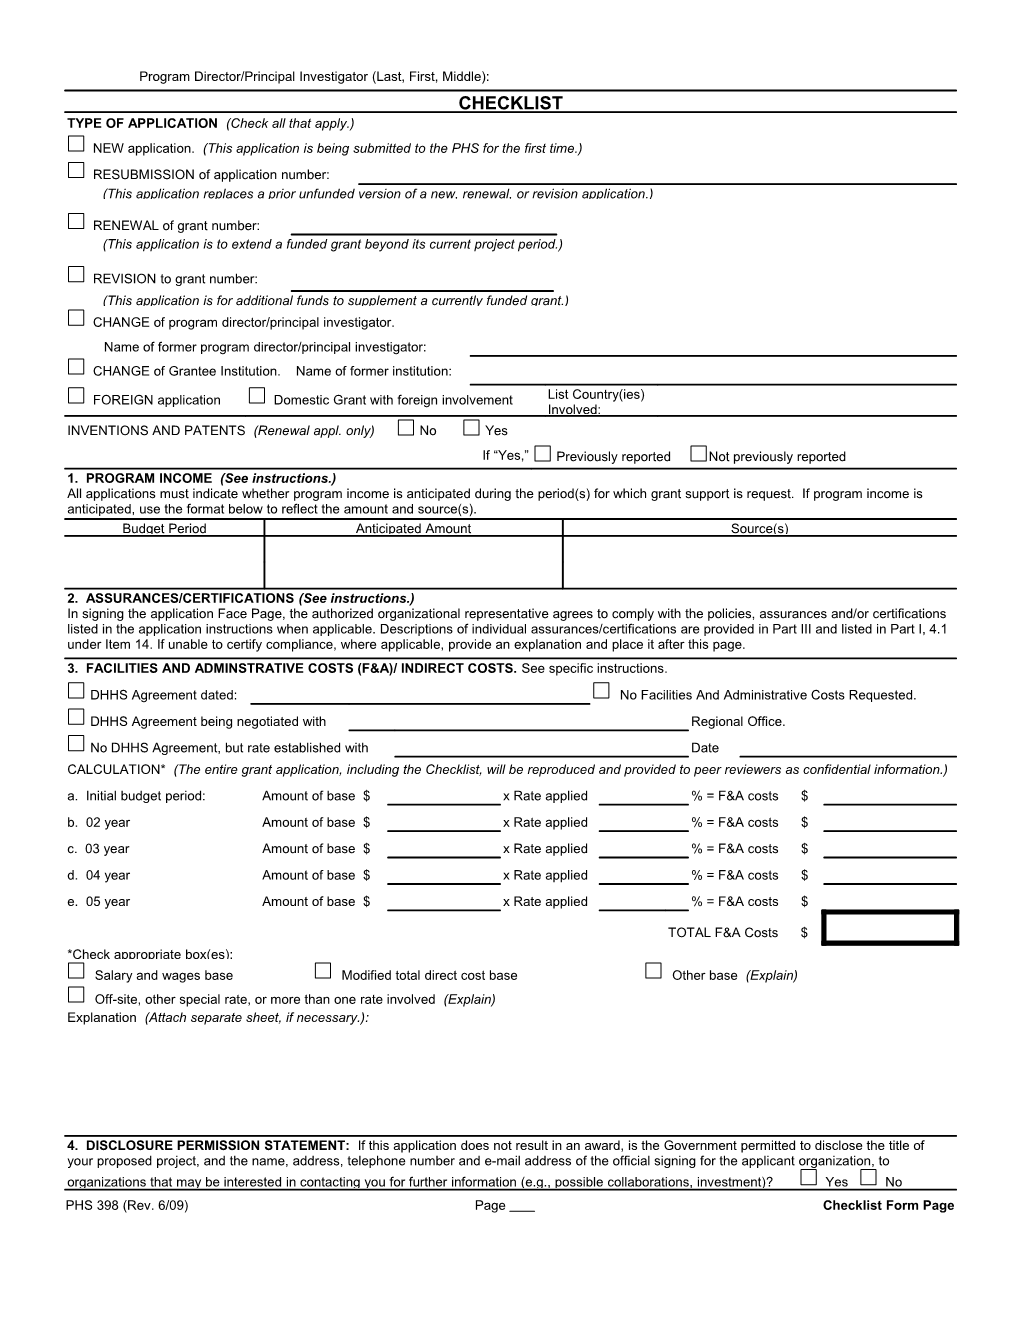 PHS 398 (Rev. 6/09), Checklist Form Page